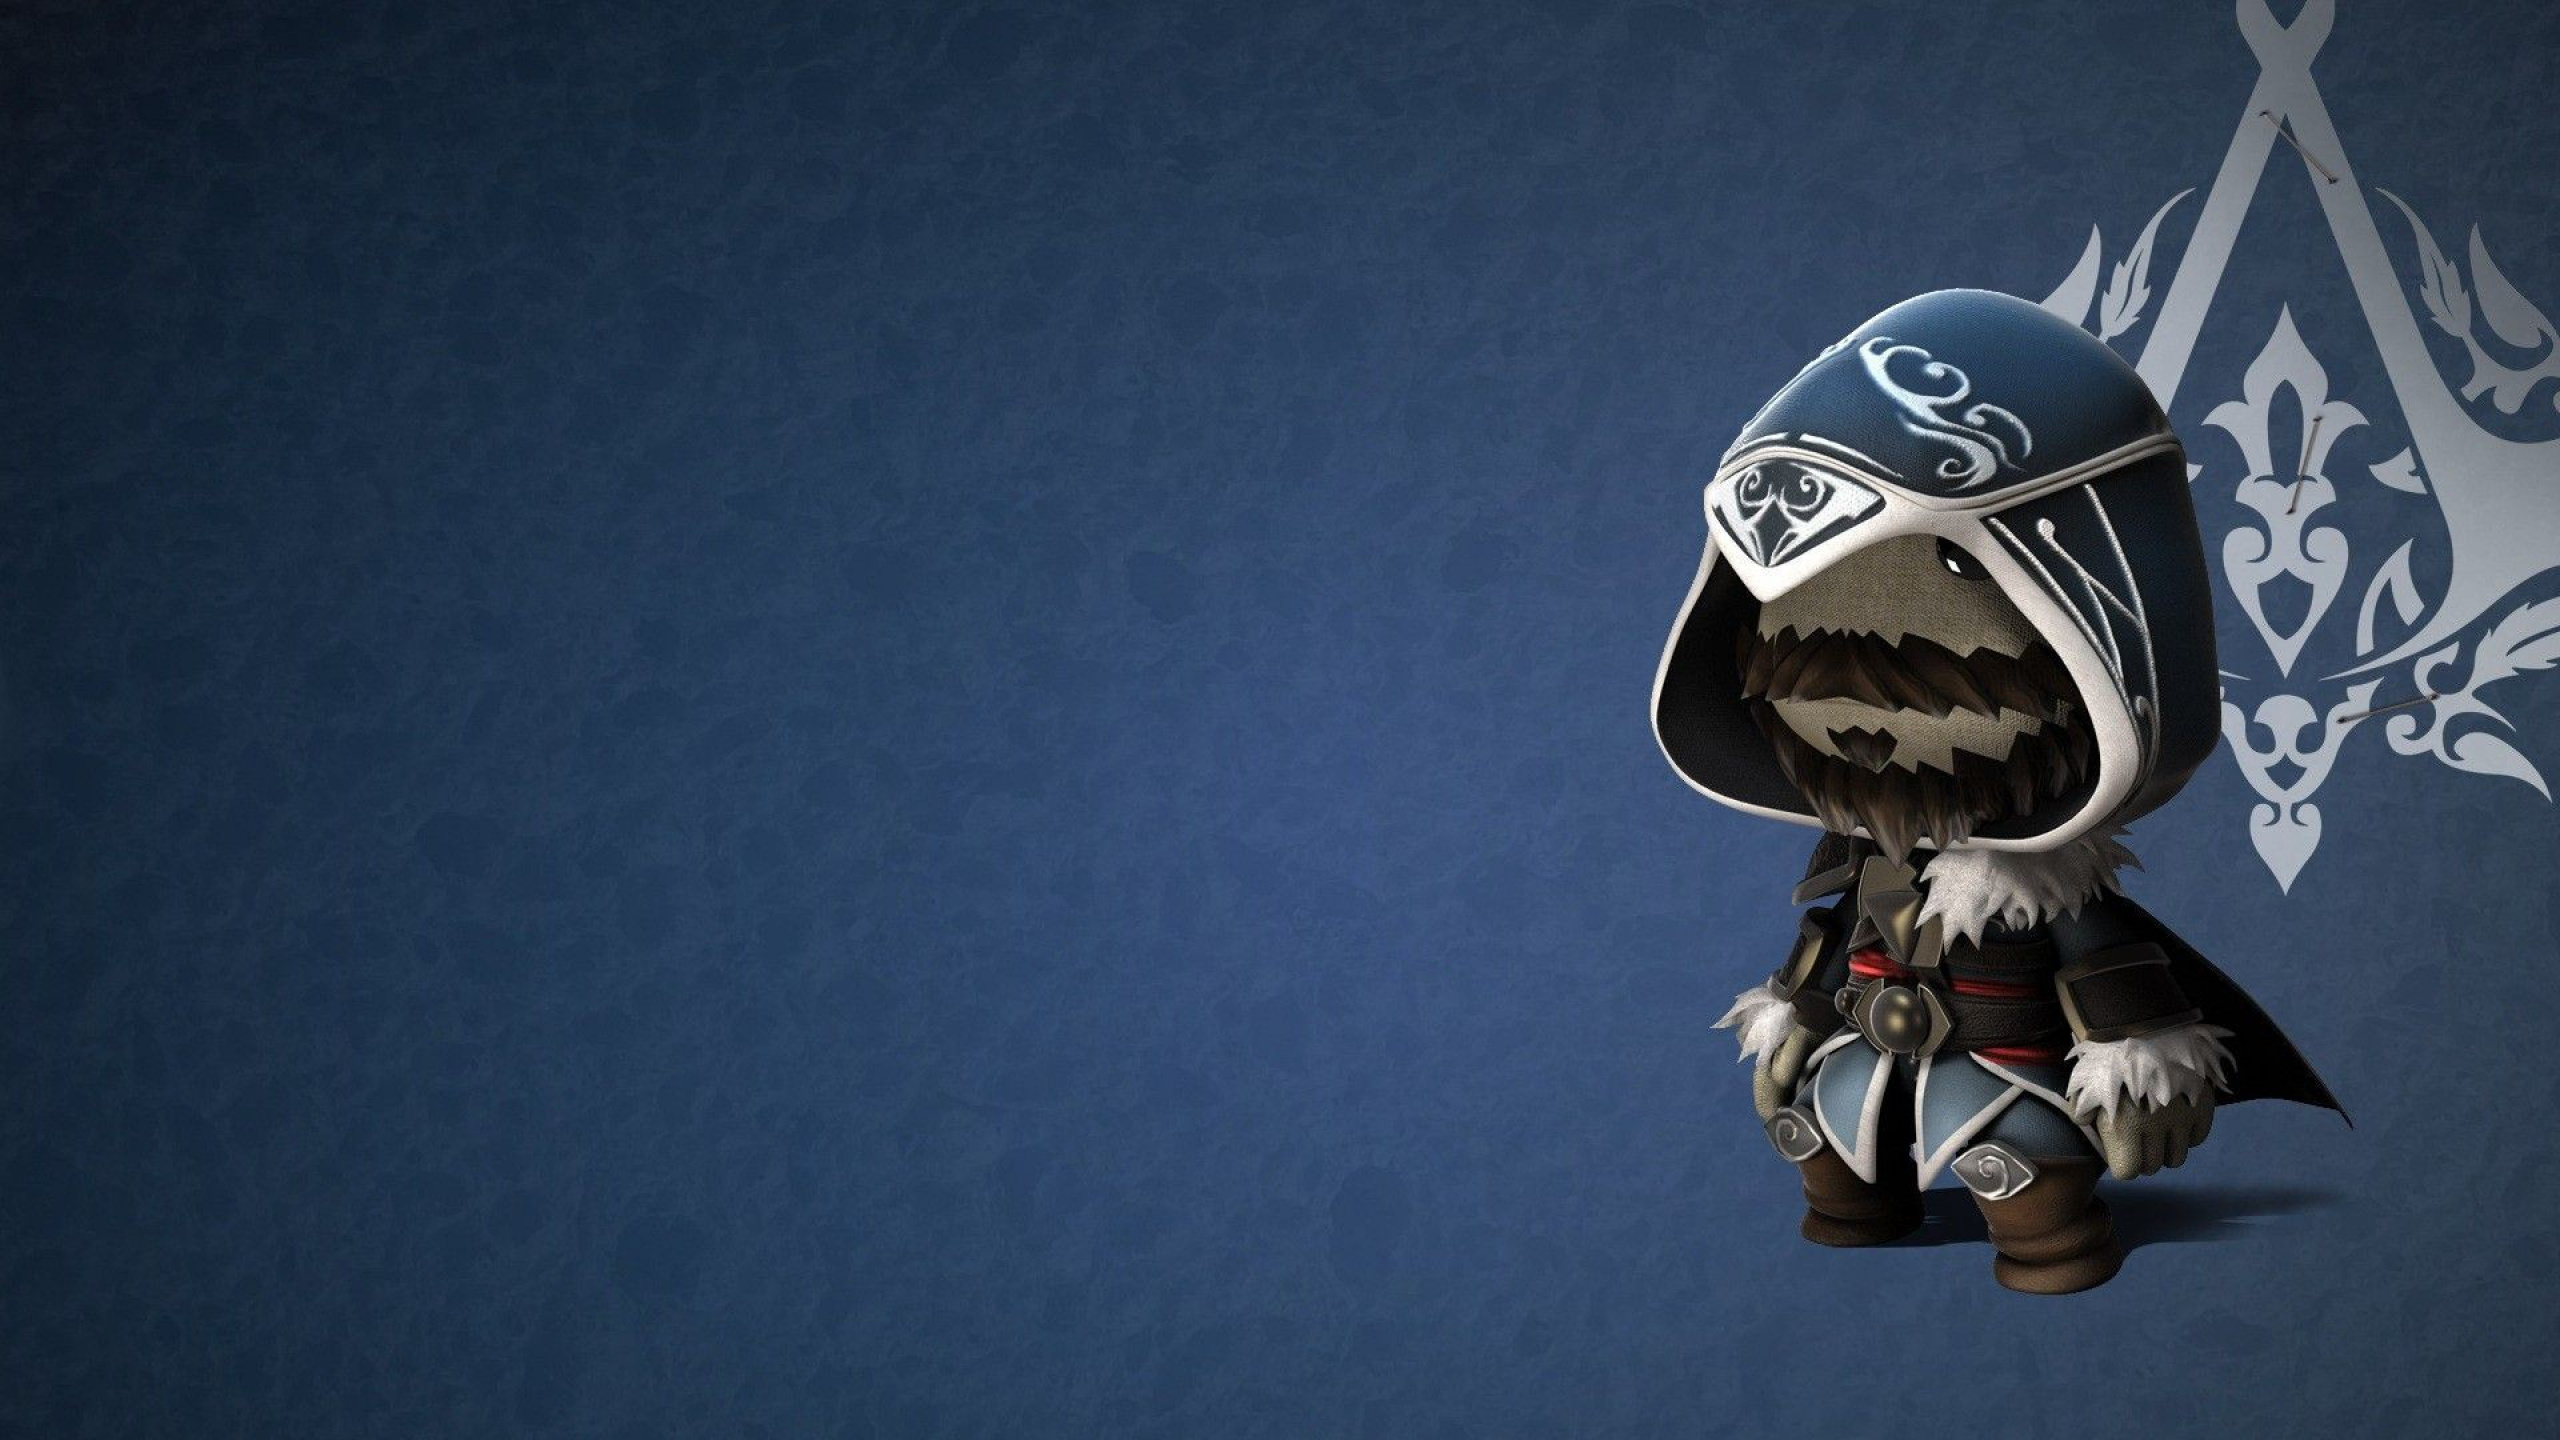 LittleBigPlanet, Helmet, Headgear, Space, Ezio Auditore. Wallpaper in 2560x1440 Resolution